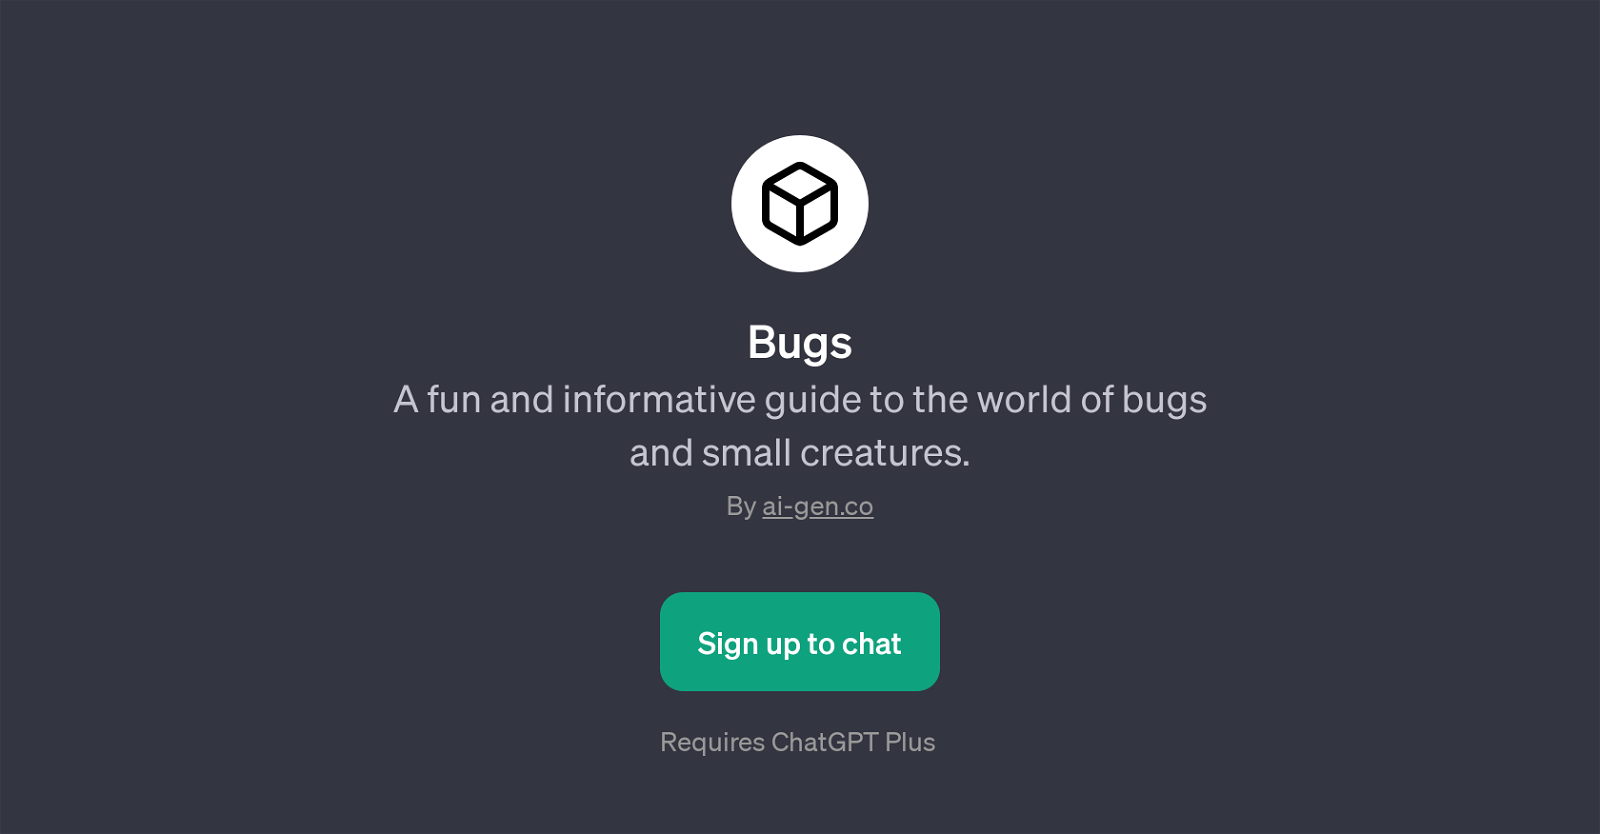 BugsPage website